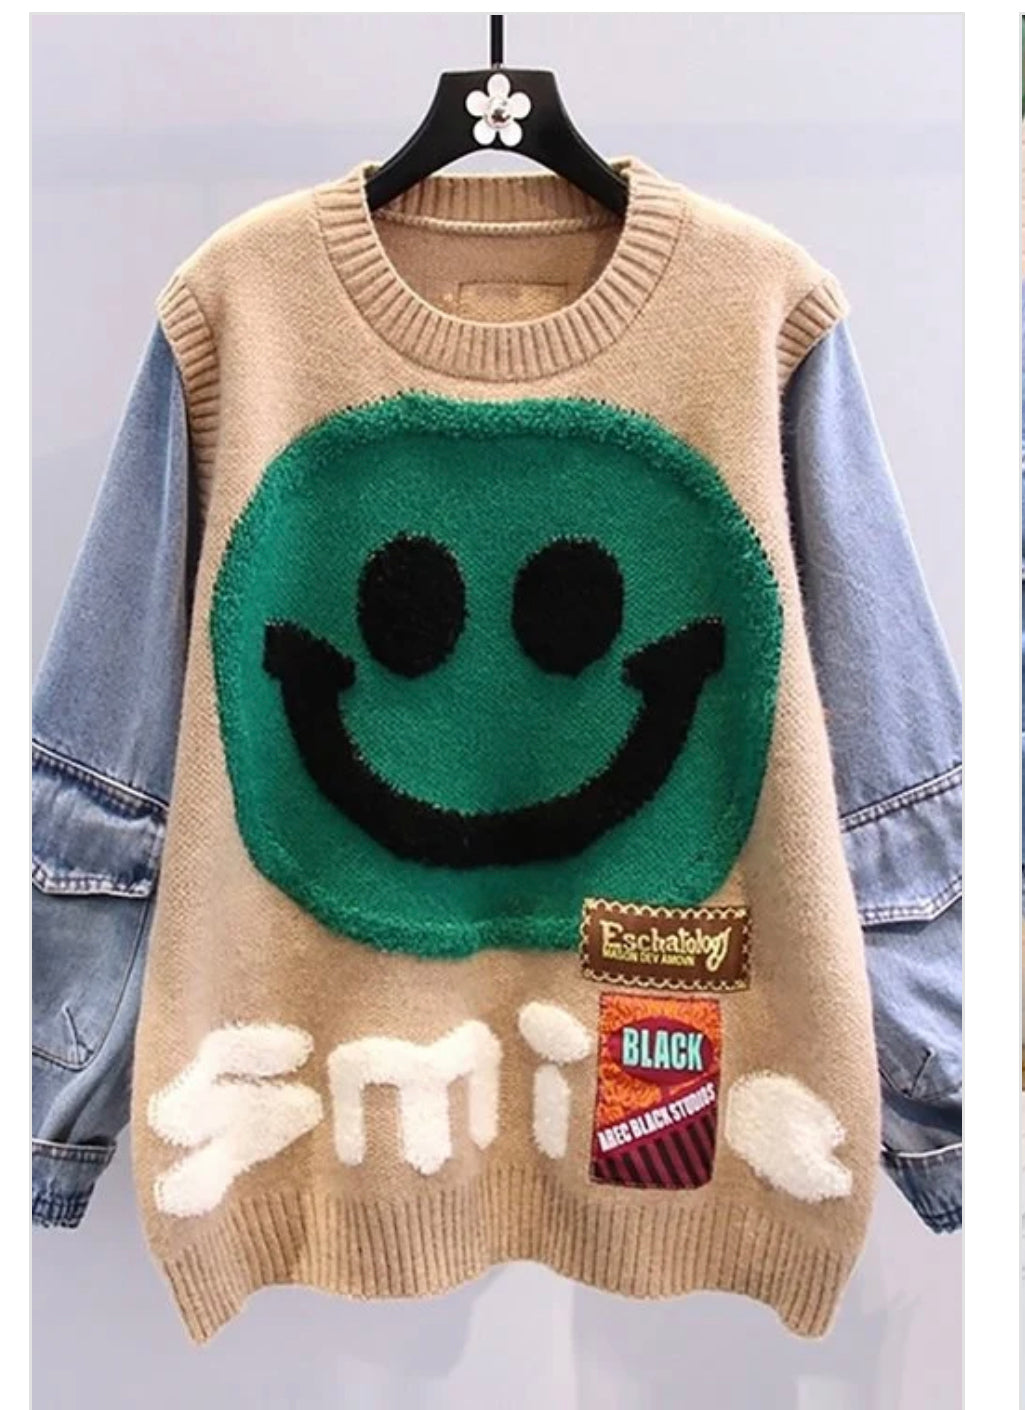 Make me smile denim sweater